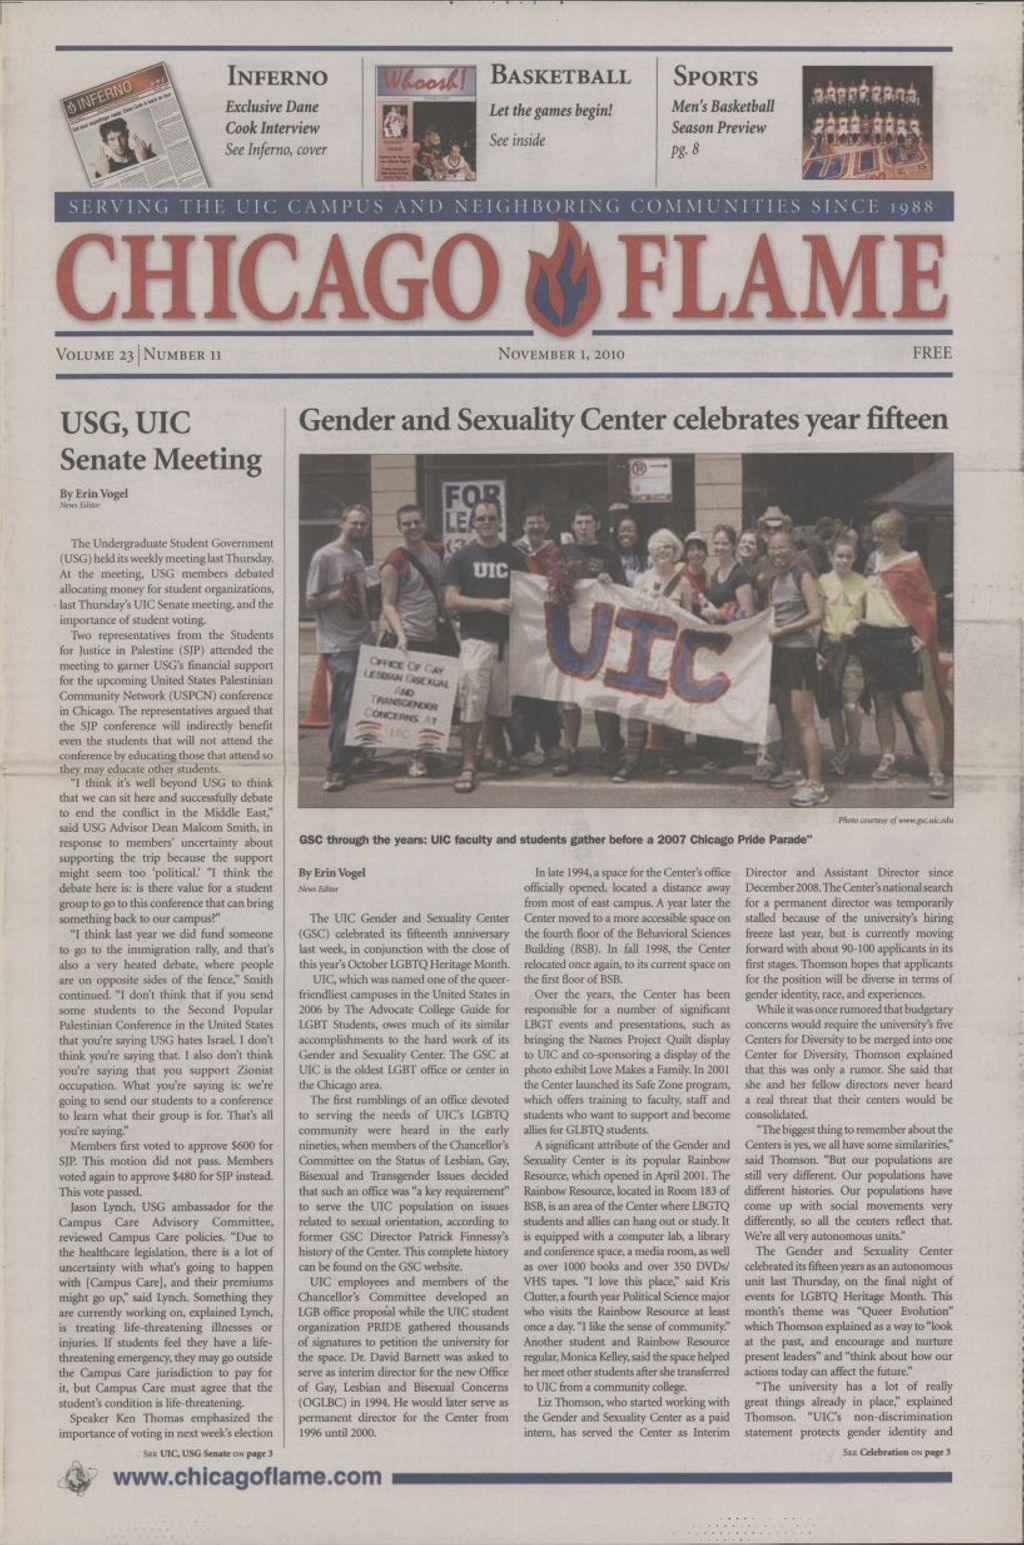 Chicago Flame (November 1, 2010)